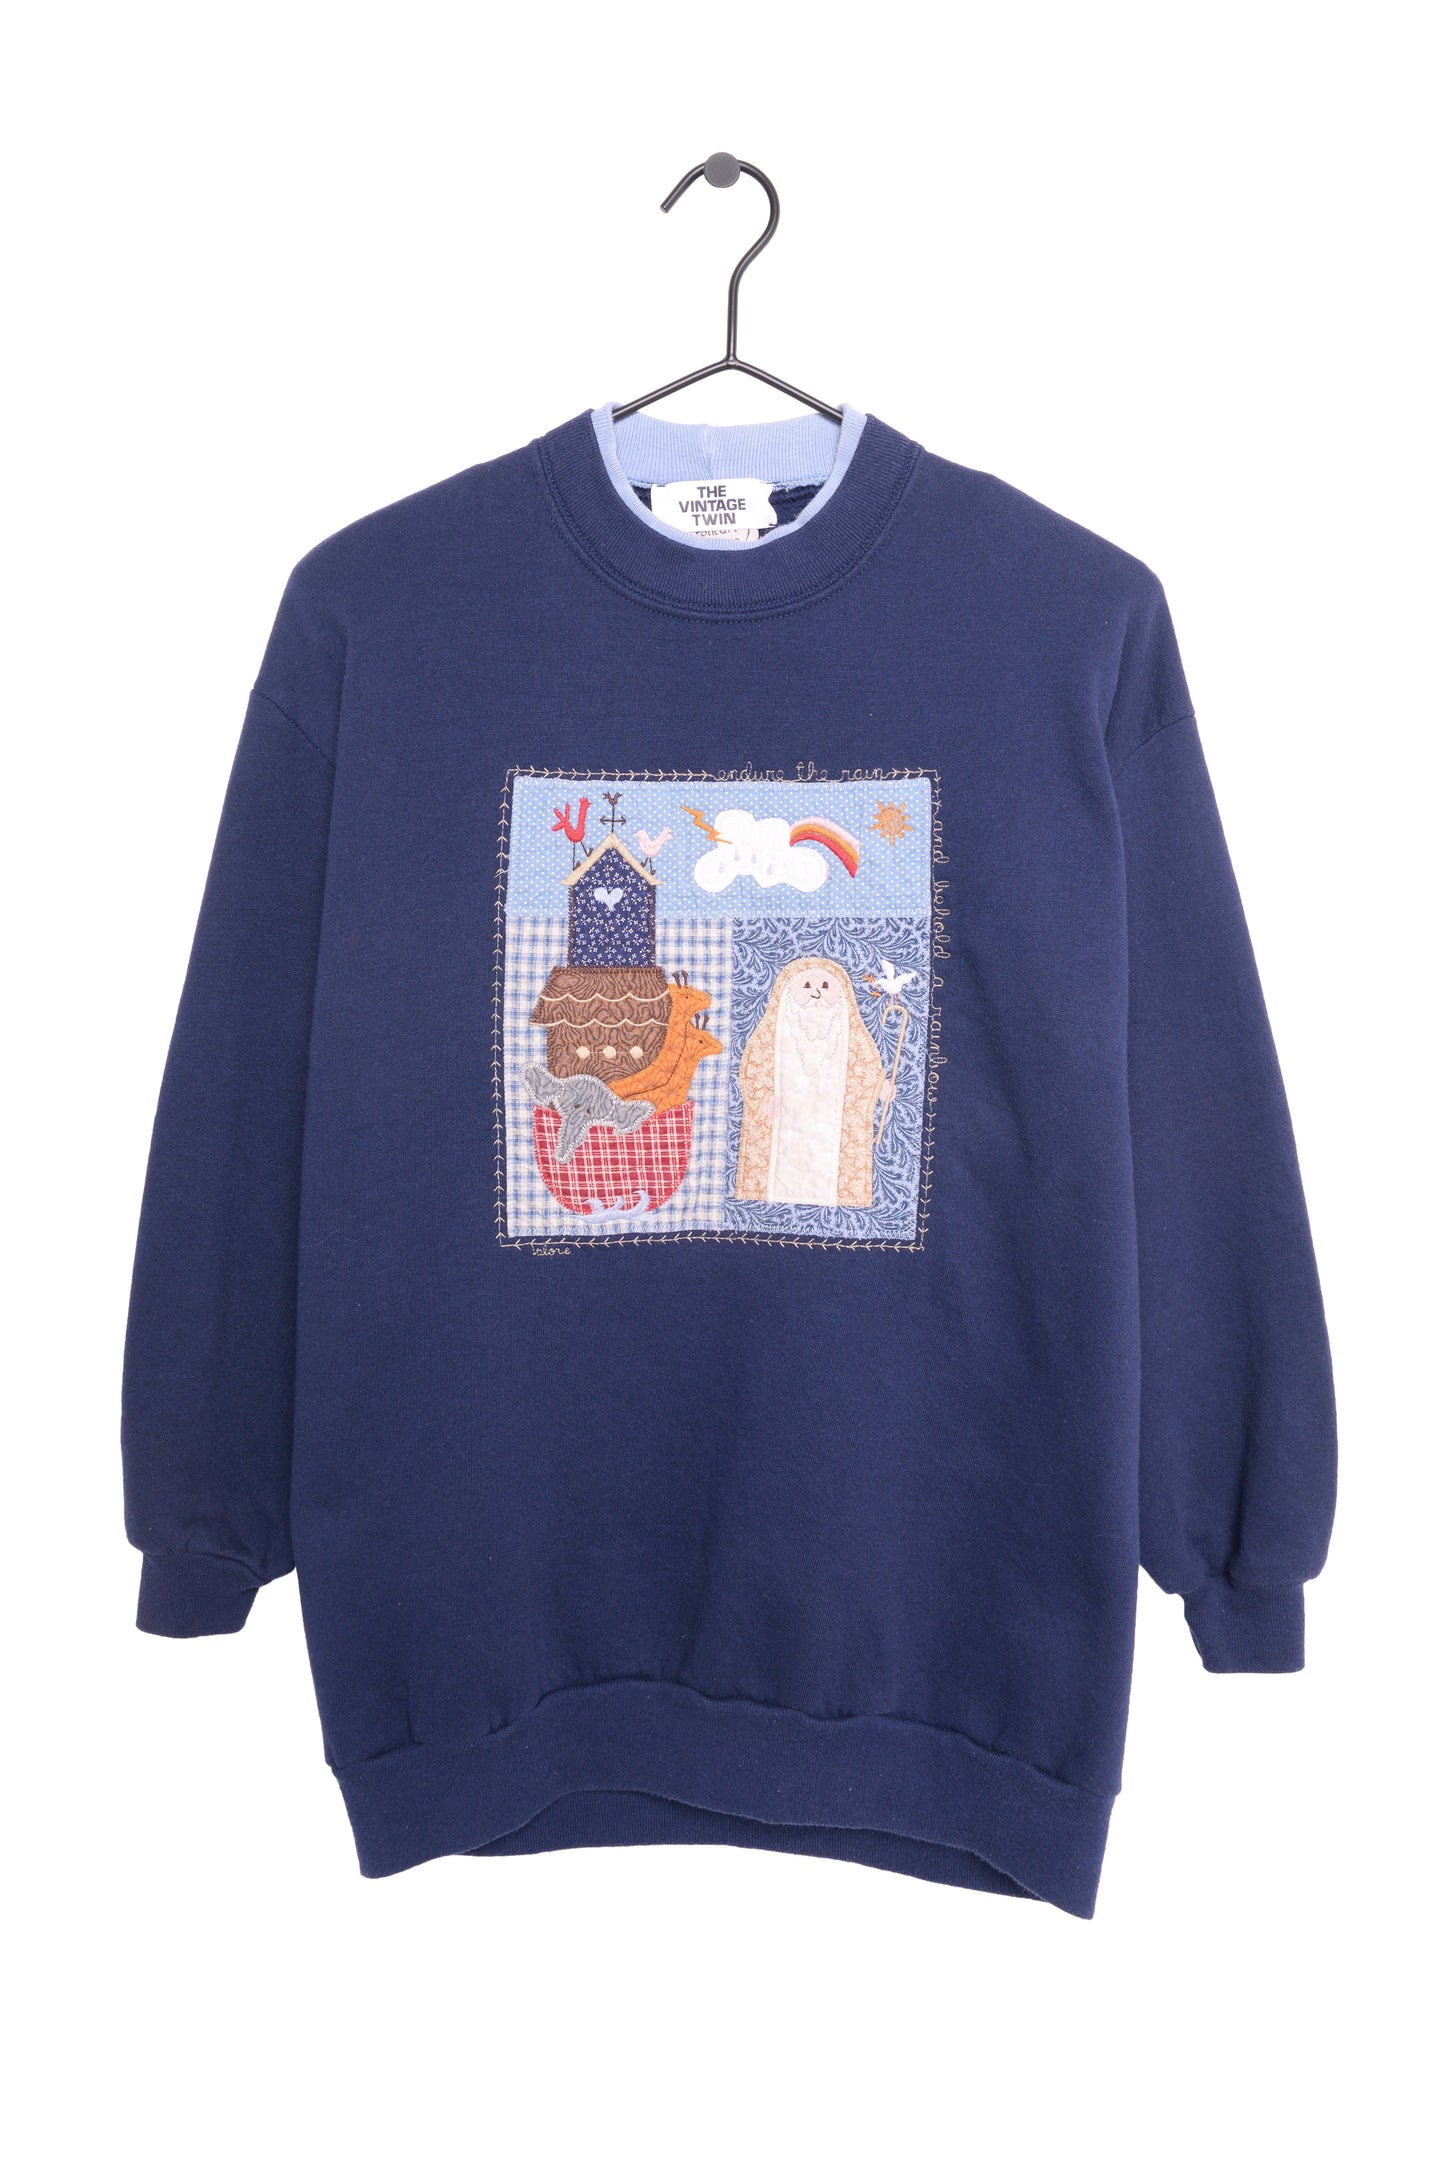 1990s Noah's Ark Grandma Sweatshirt USA